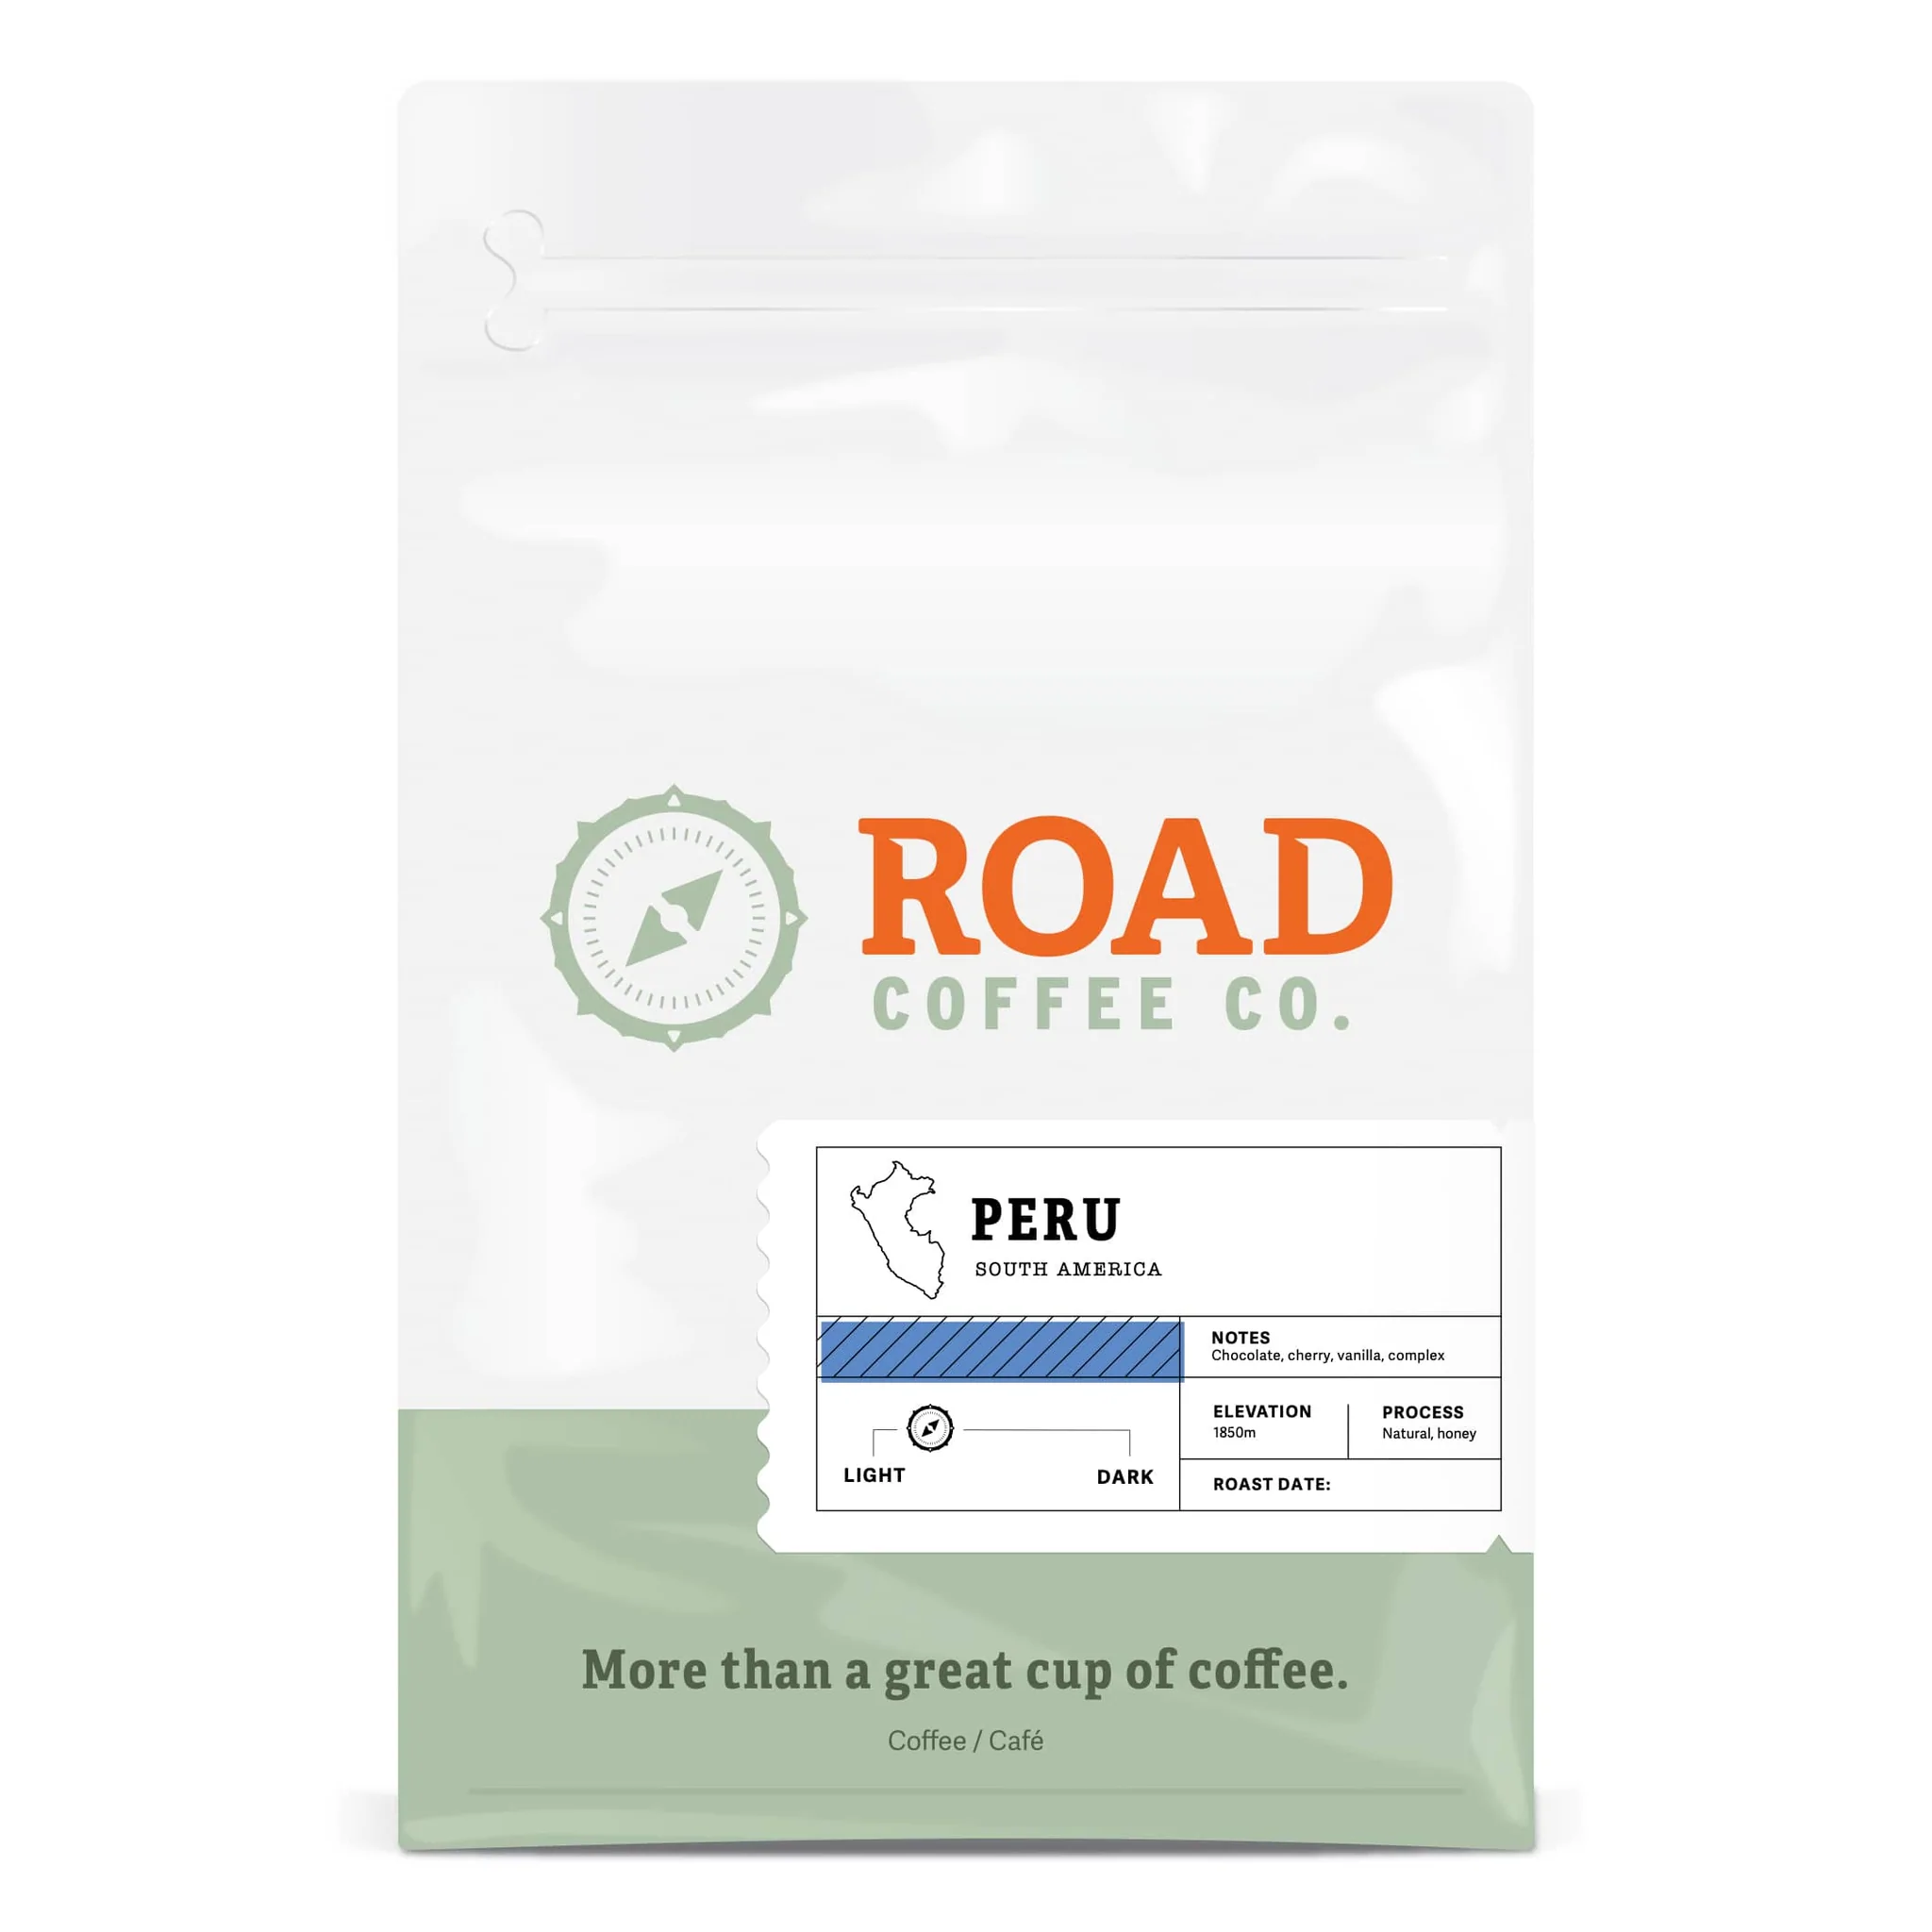 Road Coffee Road Coffee Ground